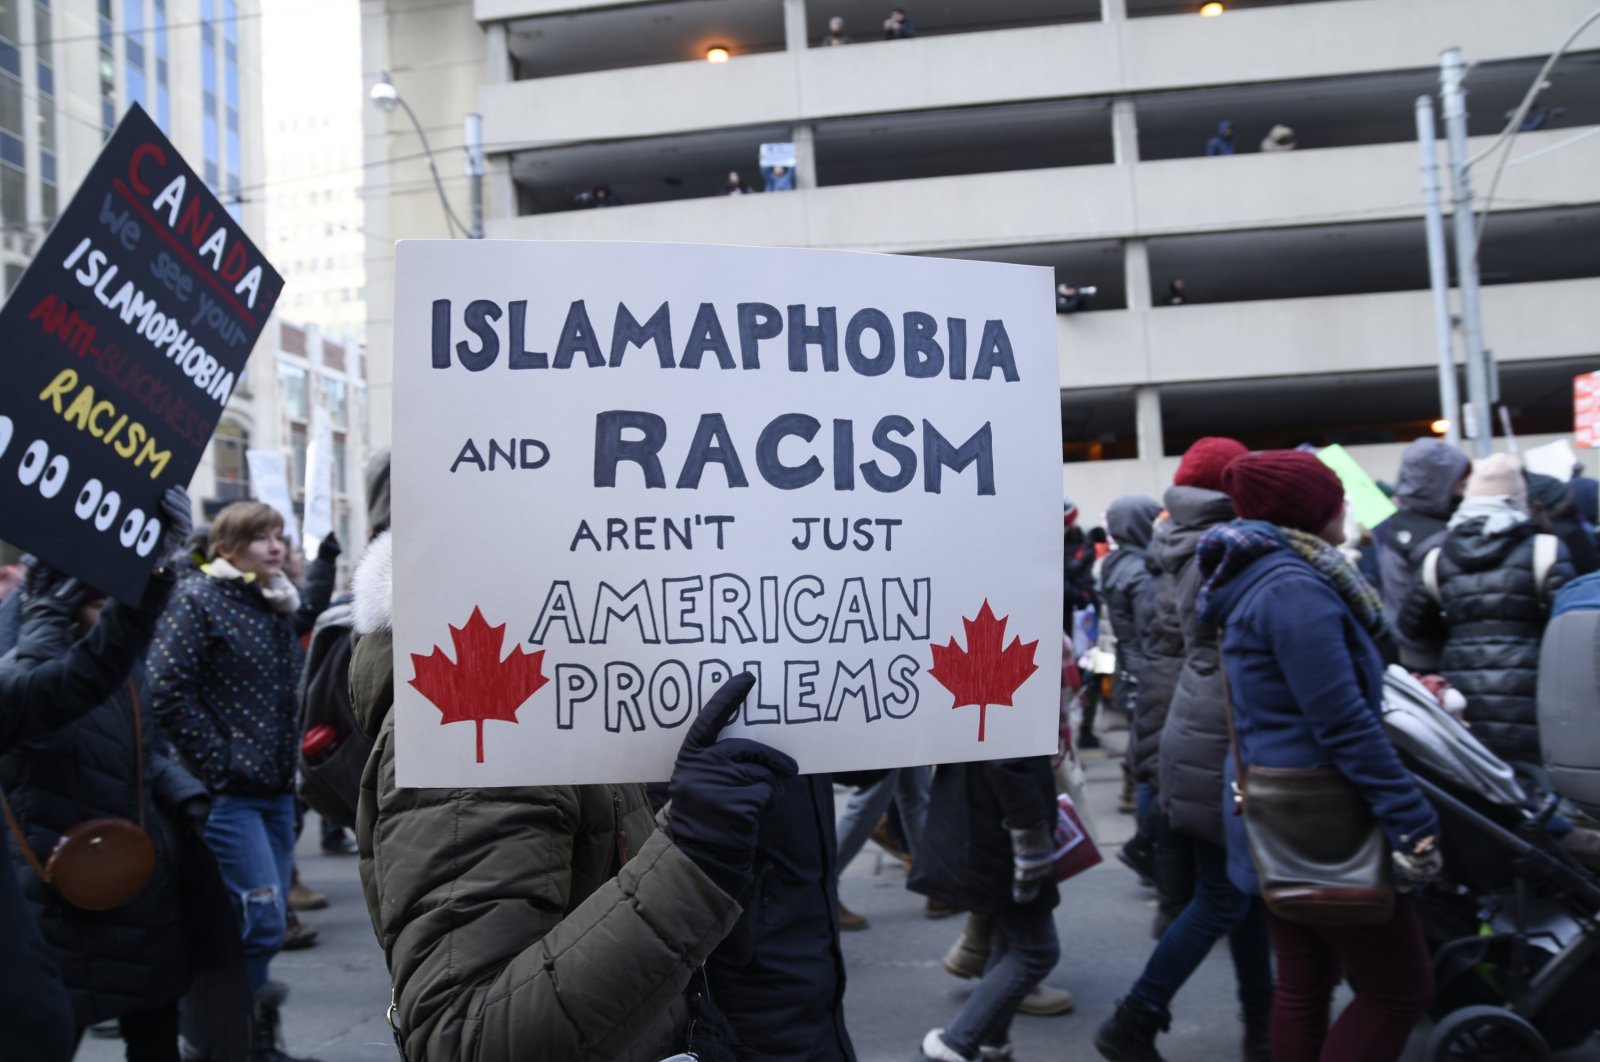 Orang-orang dengan poster yang menolak rasisme dan Islamofobia saat unjuk rasa di Toronto, Kanada, 4 Februari 2017. (Foto AP)